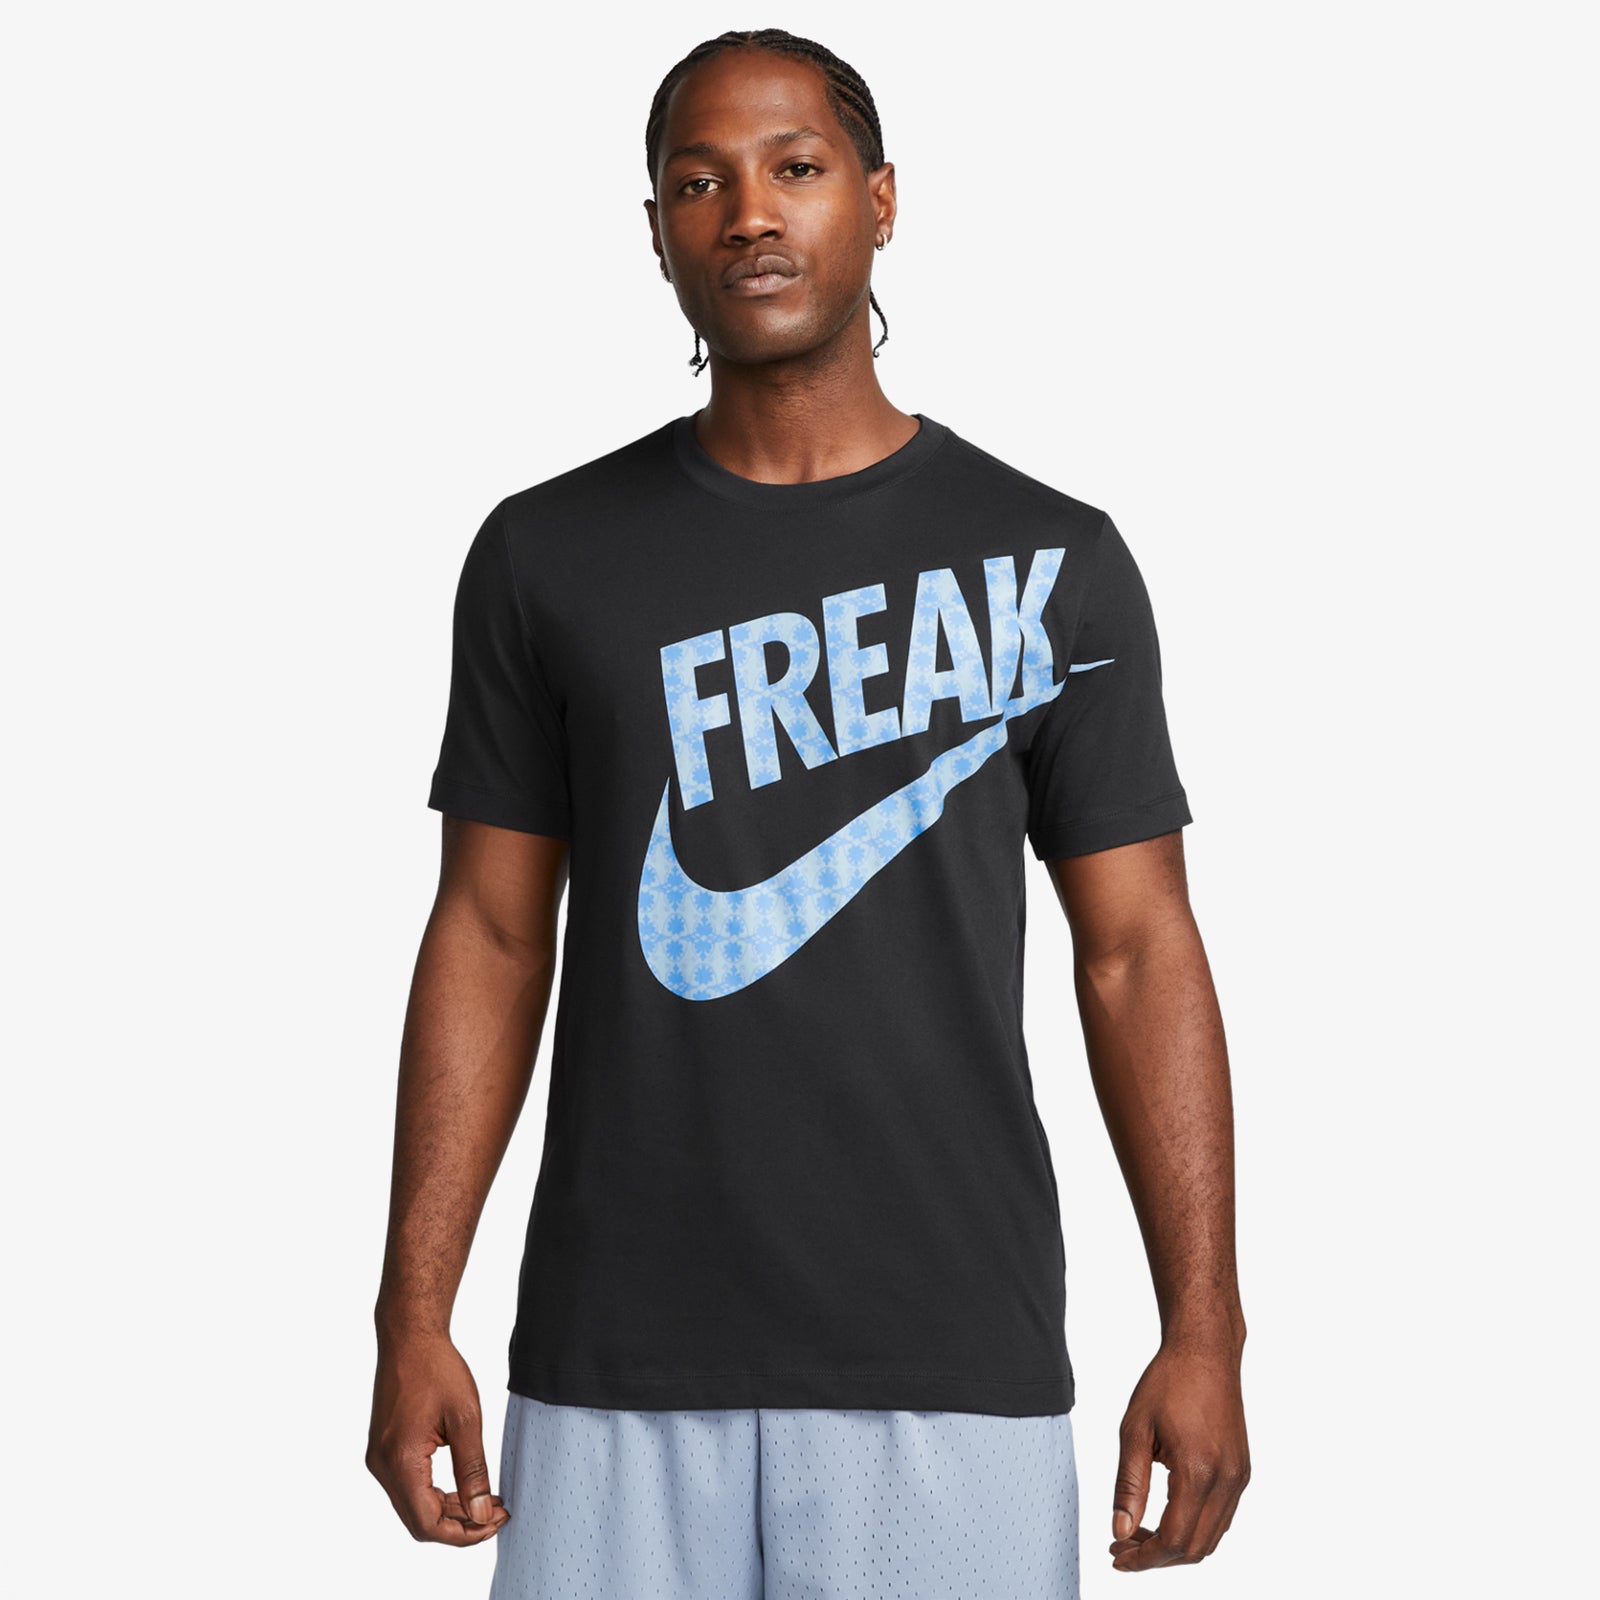 Nike / Boys' Dri-FIT Giannis Freak Graphic T-Shirt